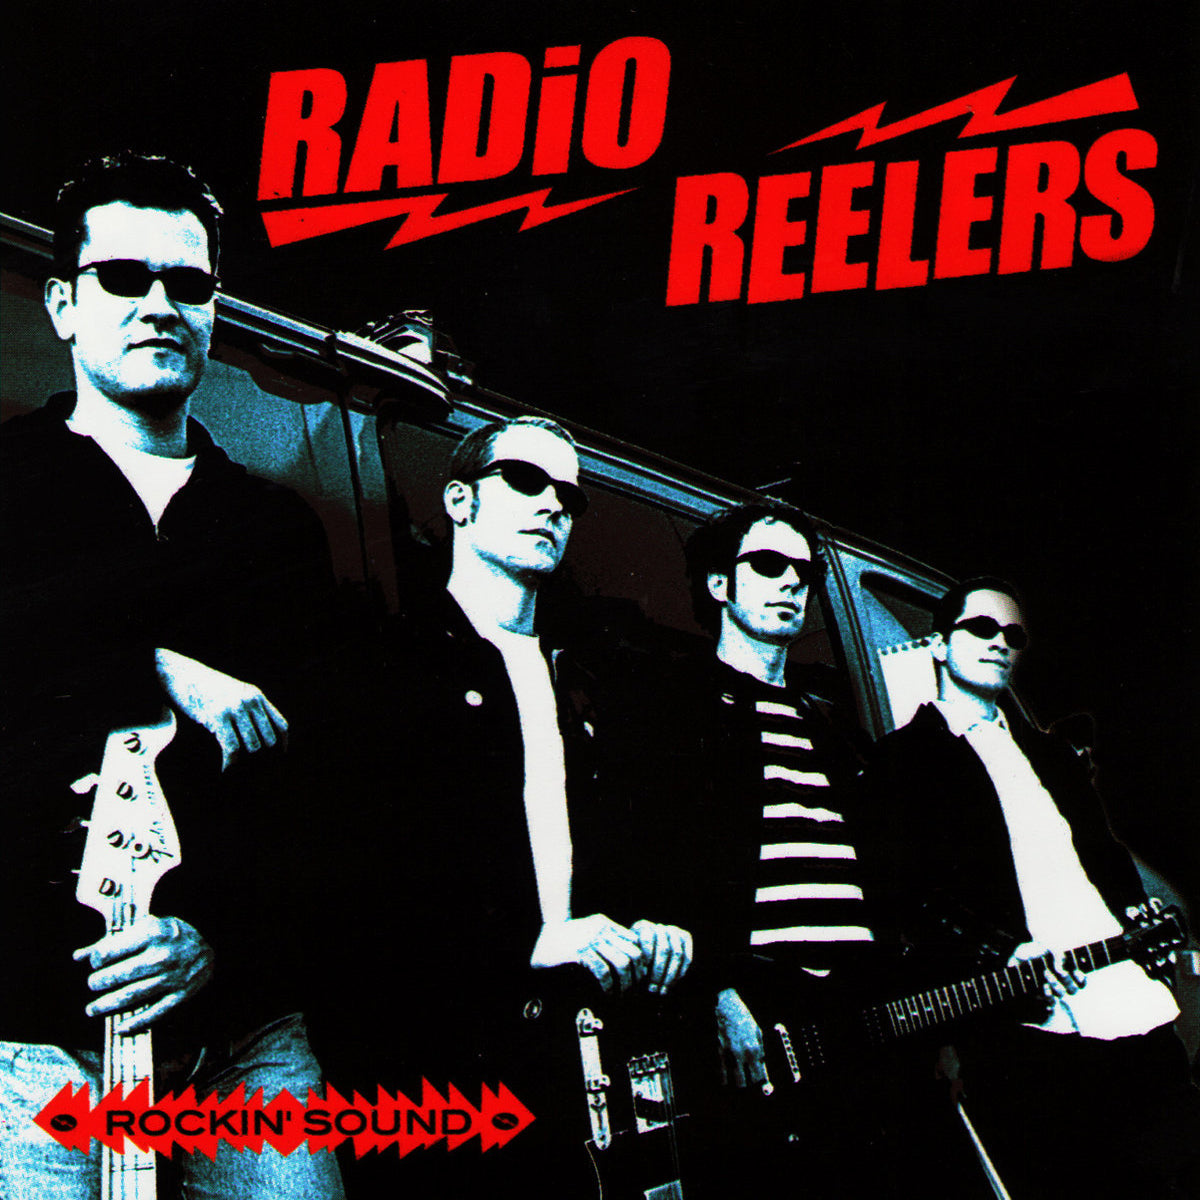 Radio Reelers- Rockin' Sound LP ~DEVIL DOGS!